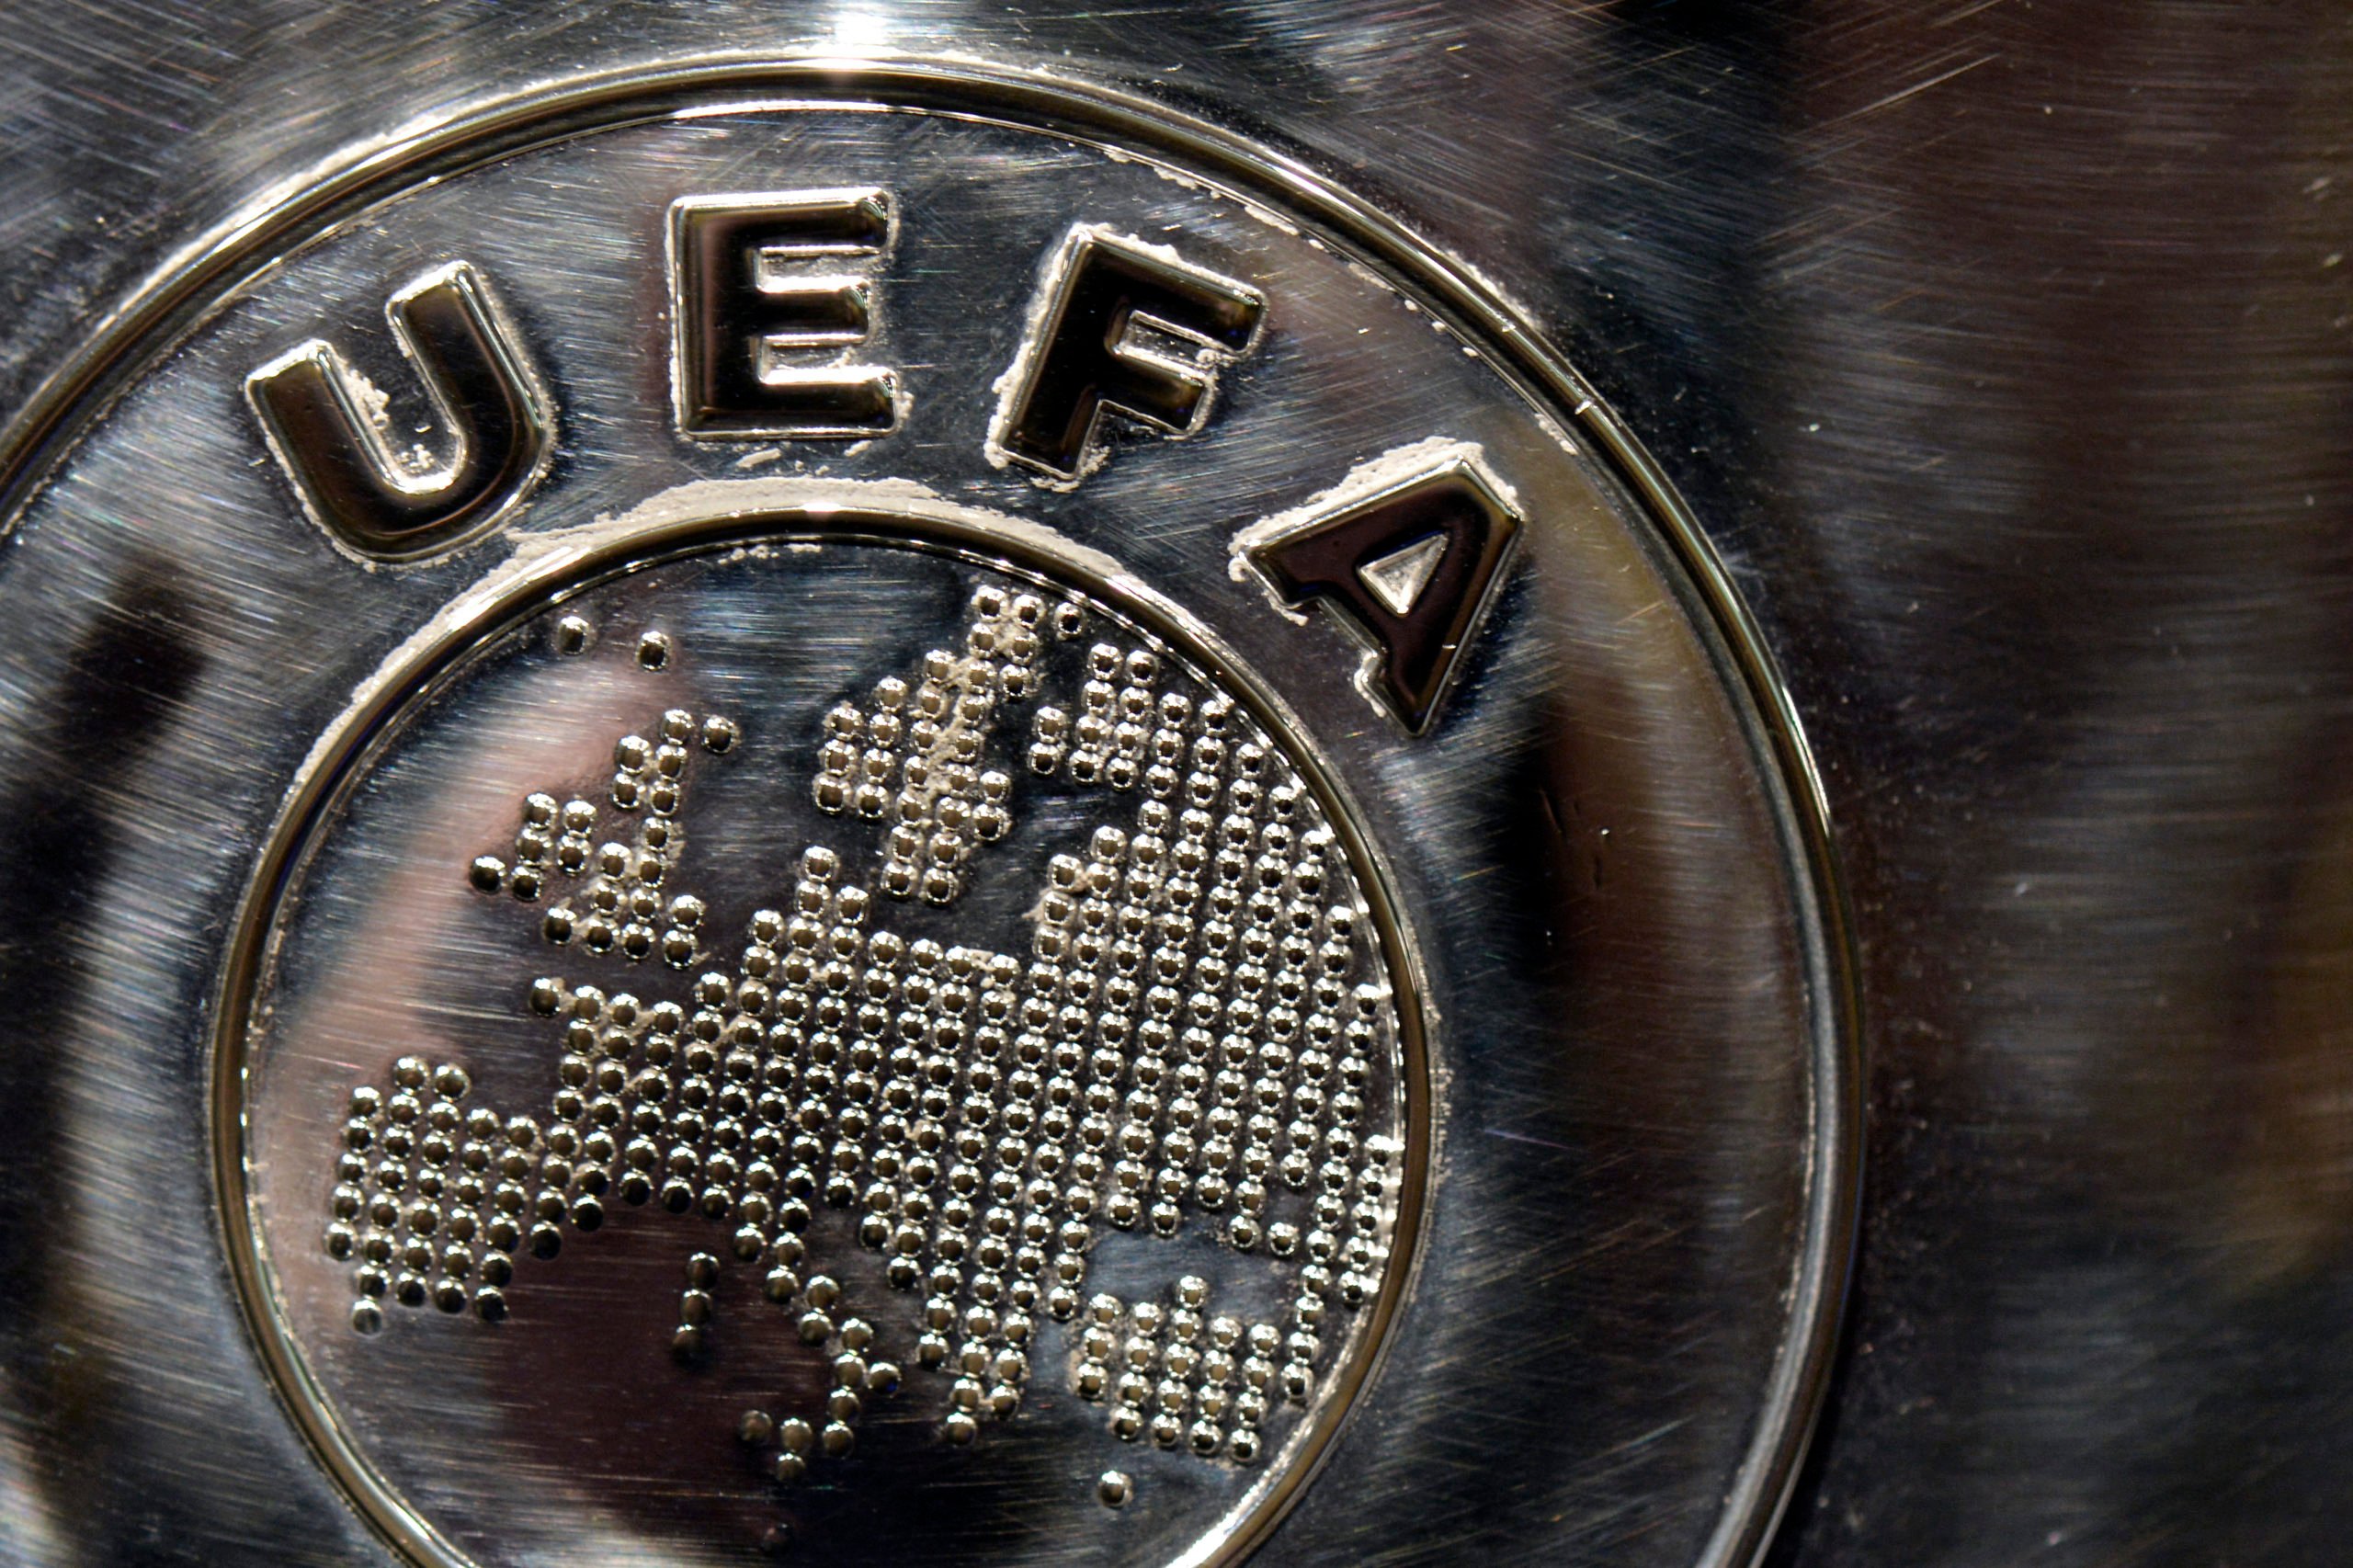 Celtic cited in UEFA chief's impassioned speech